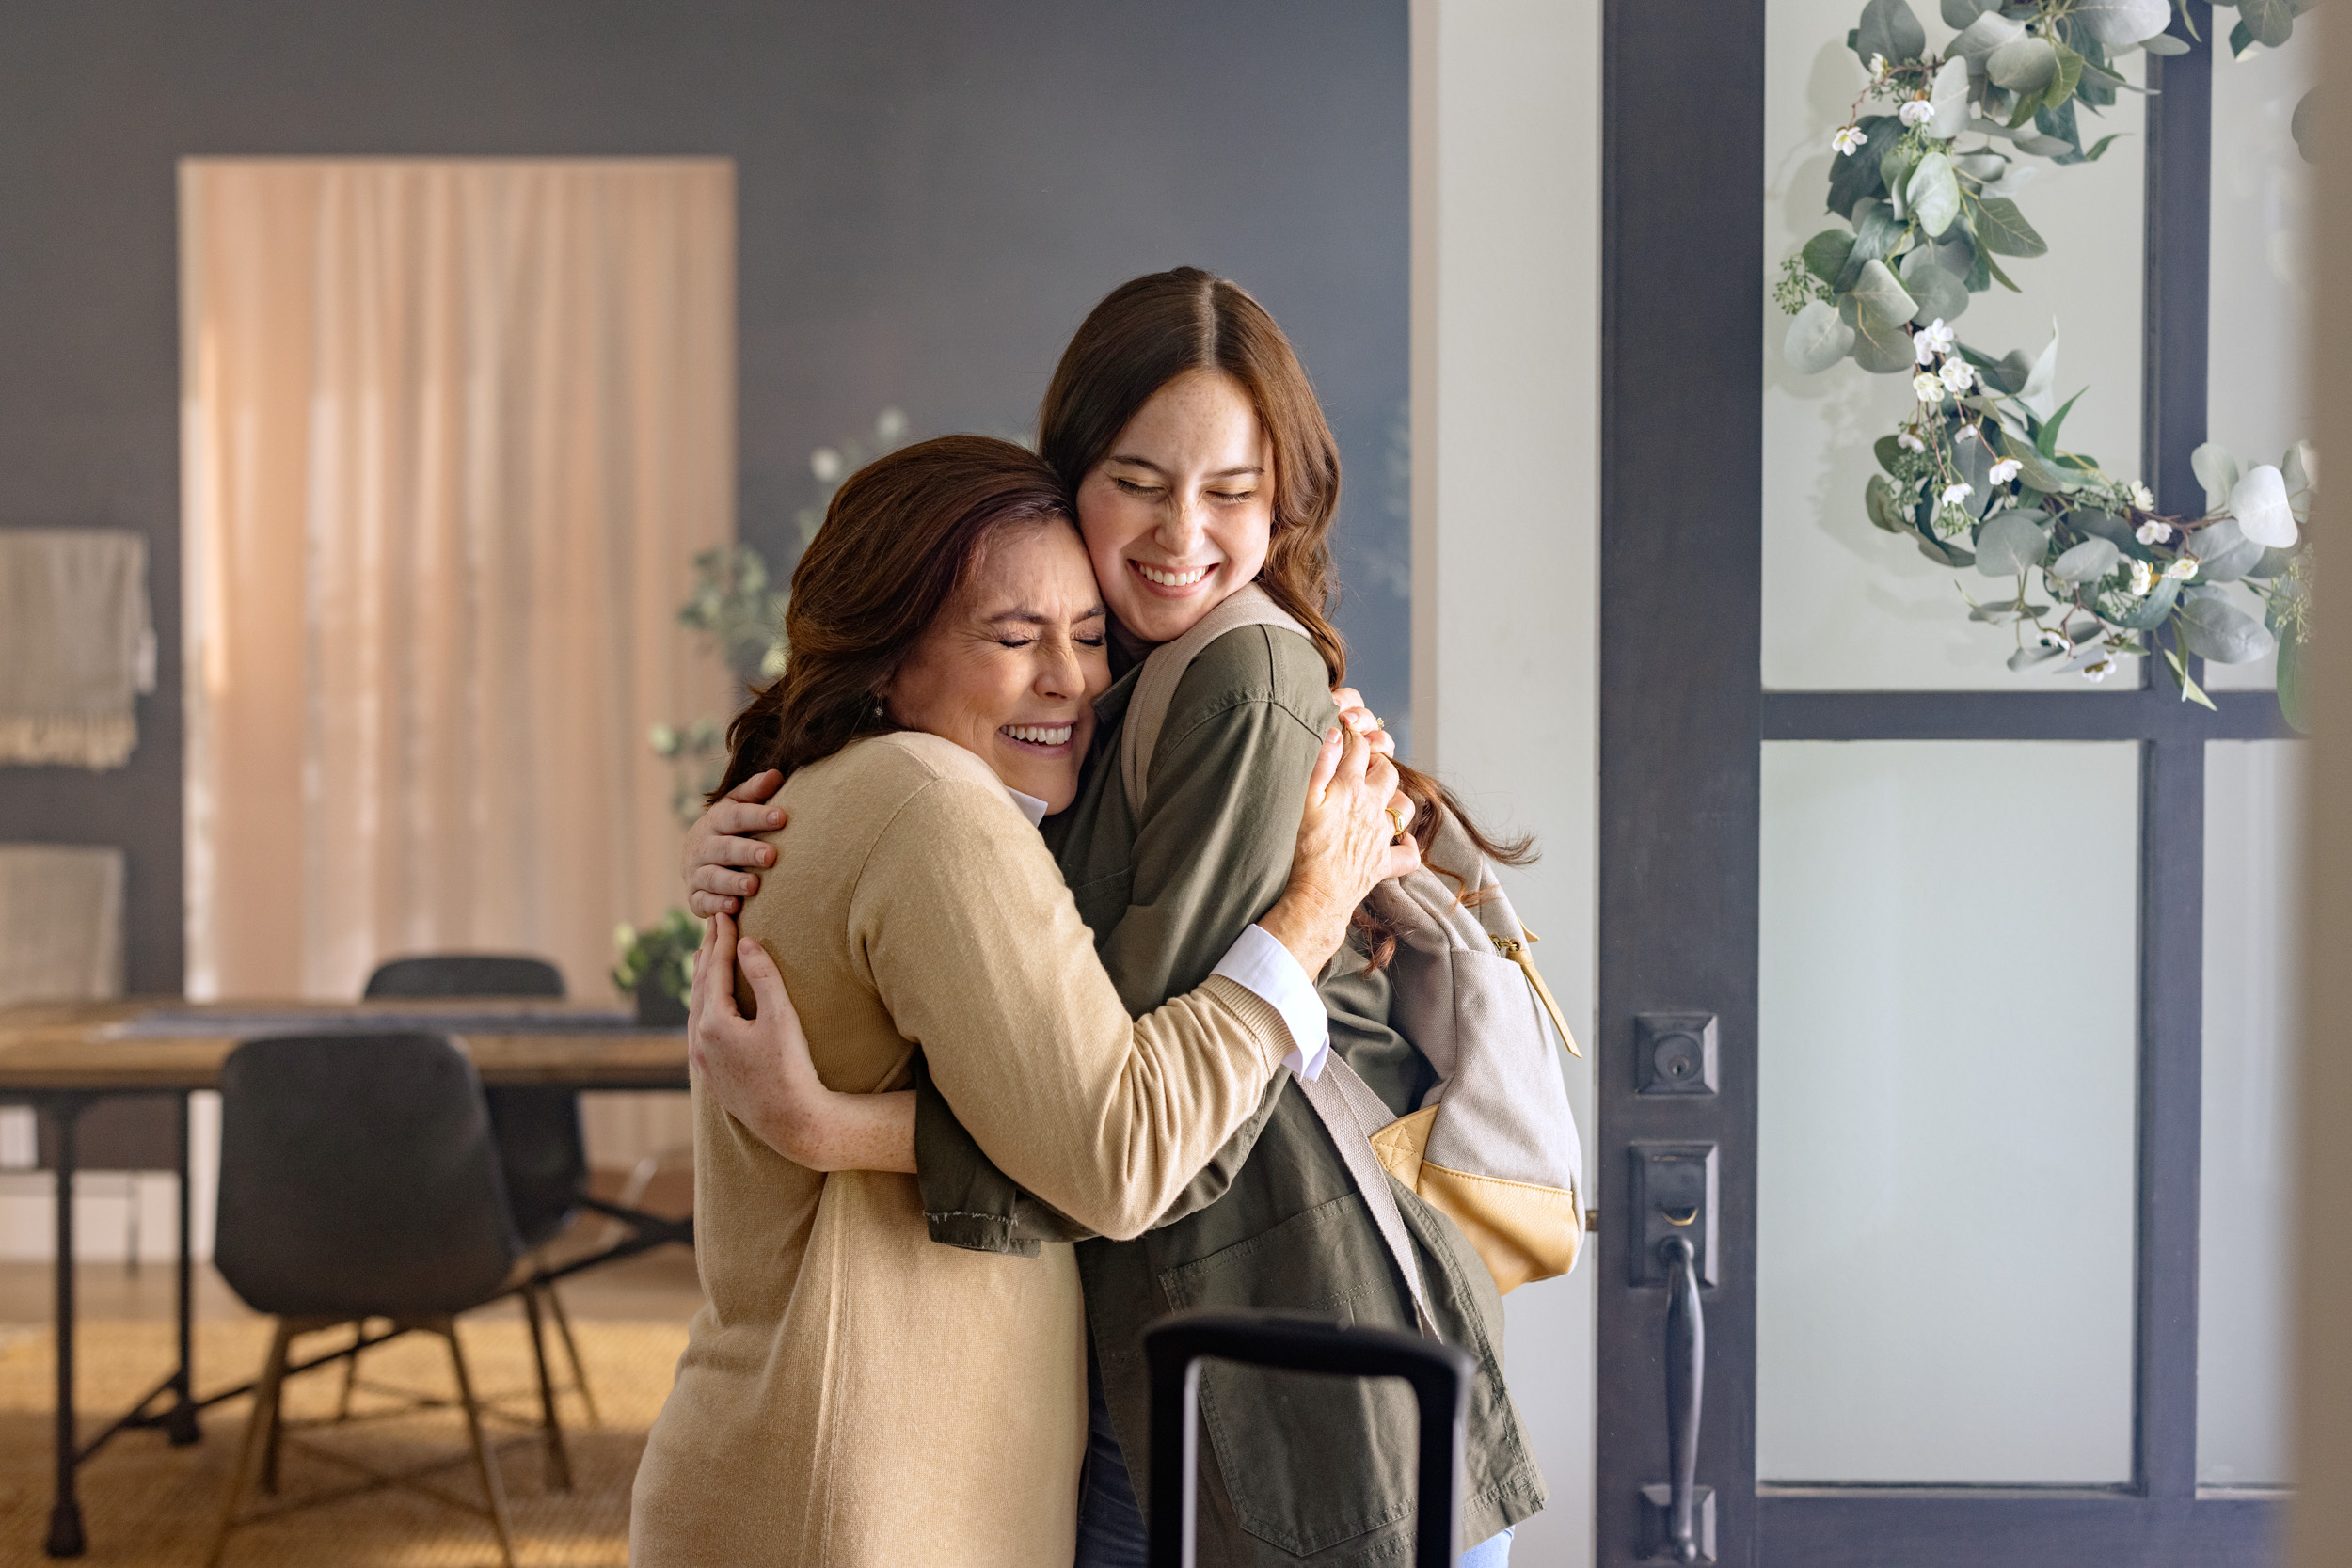 two women hug each other near doorway inside home